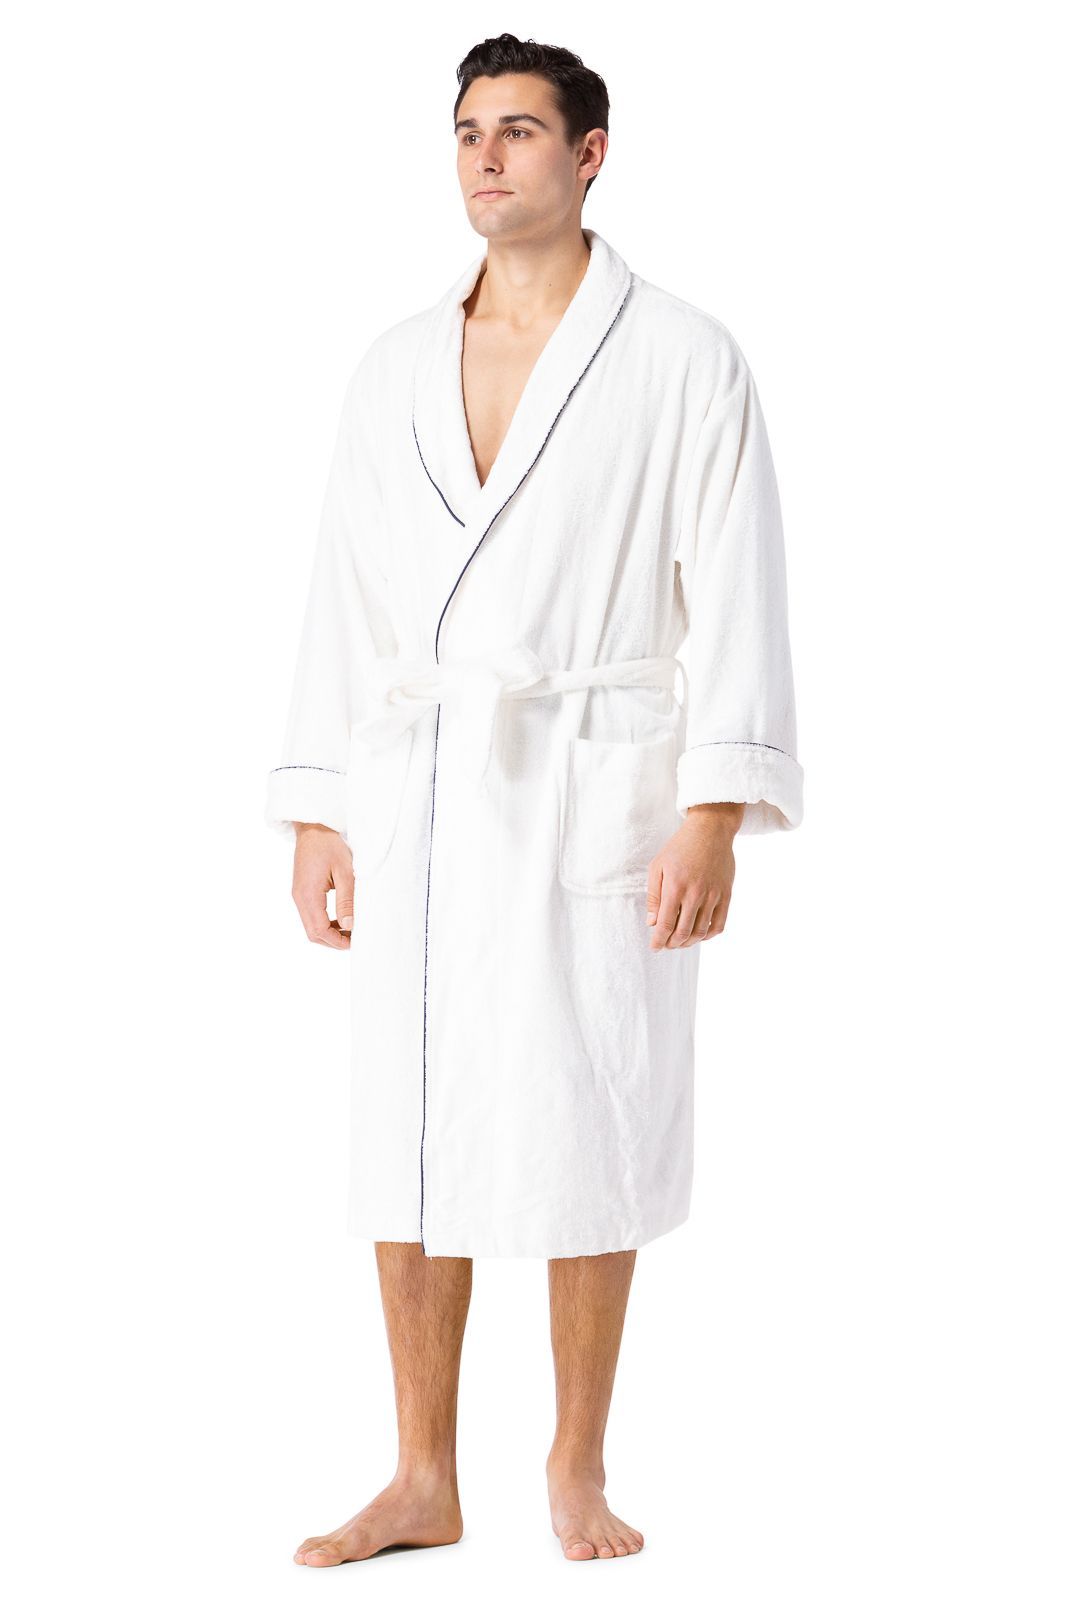 Men's Premier Turkish-Style Full Length Terry Cloth Spa Robe Mens>Sleepwear>Robe Fishers Finery White L/XL 